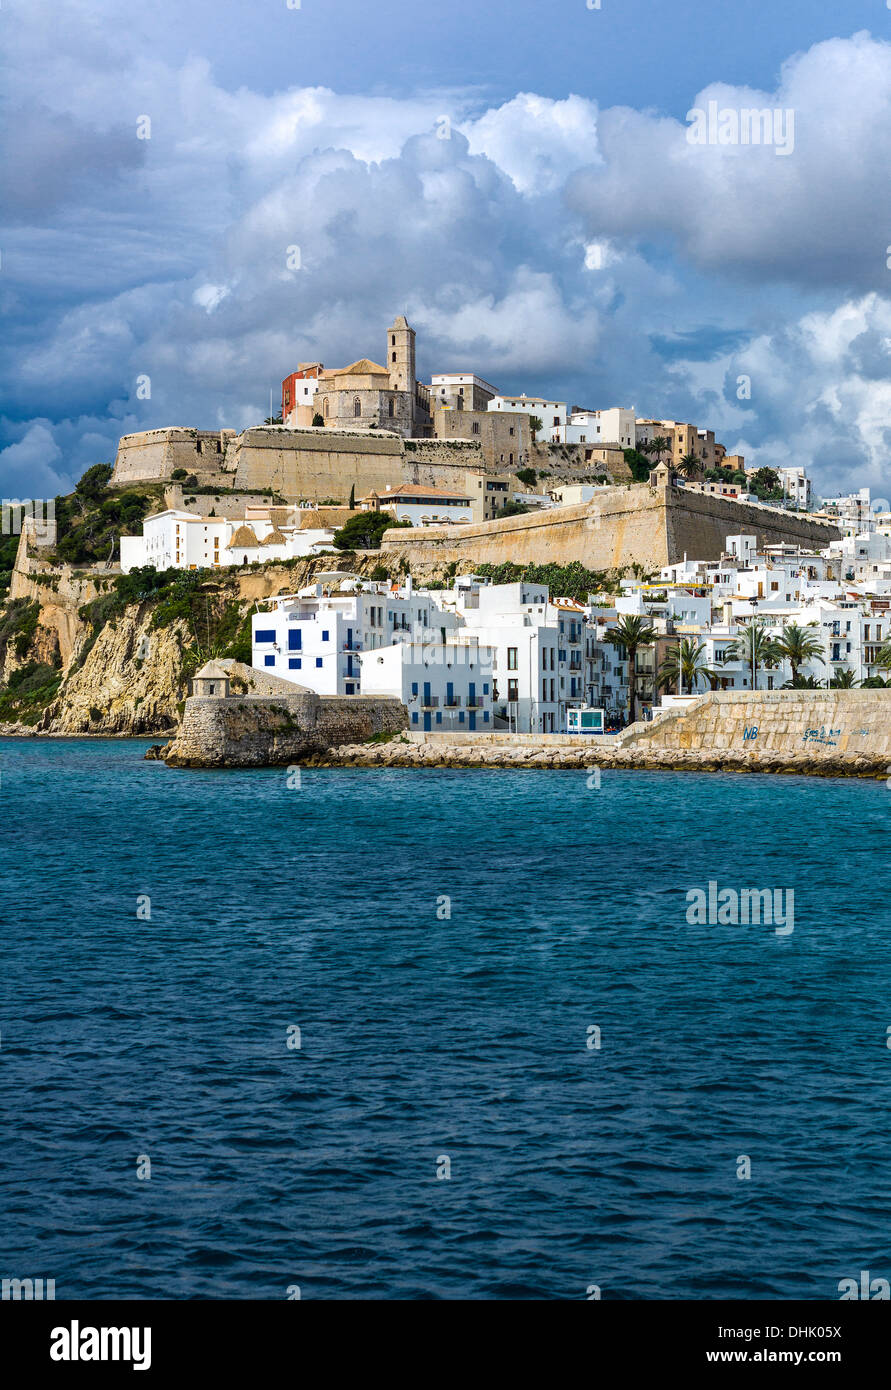 Europe, Spain, Balearic islands, Eivissa (Ibiza), view from the sea of the old town (Dalt Vila) Stock Photo